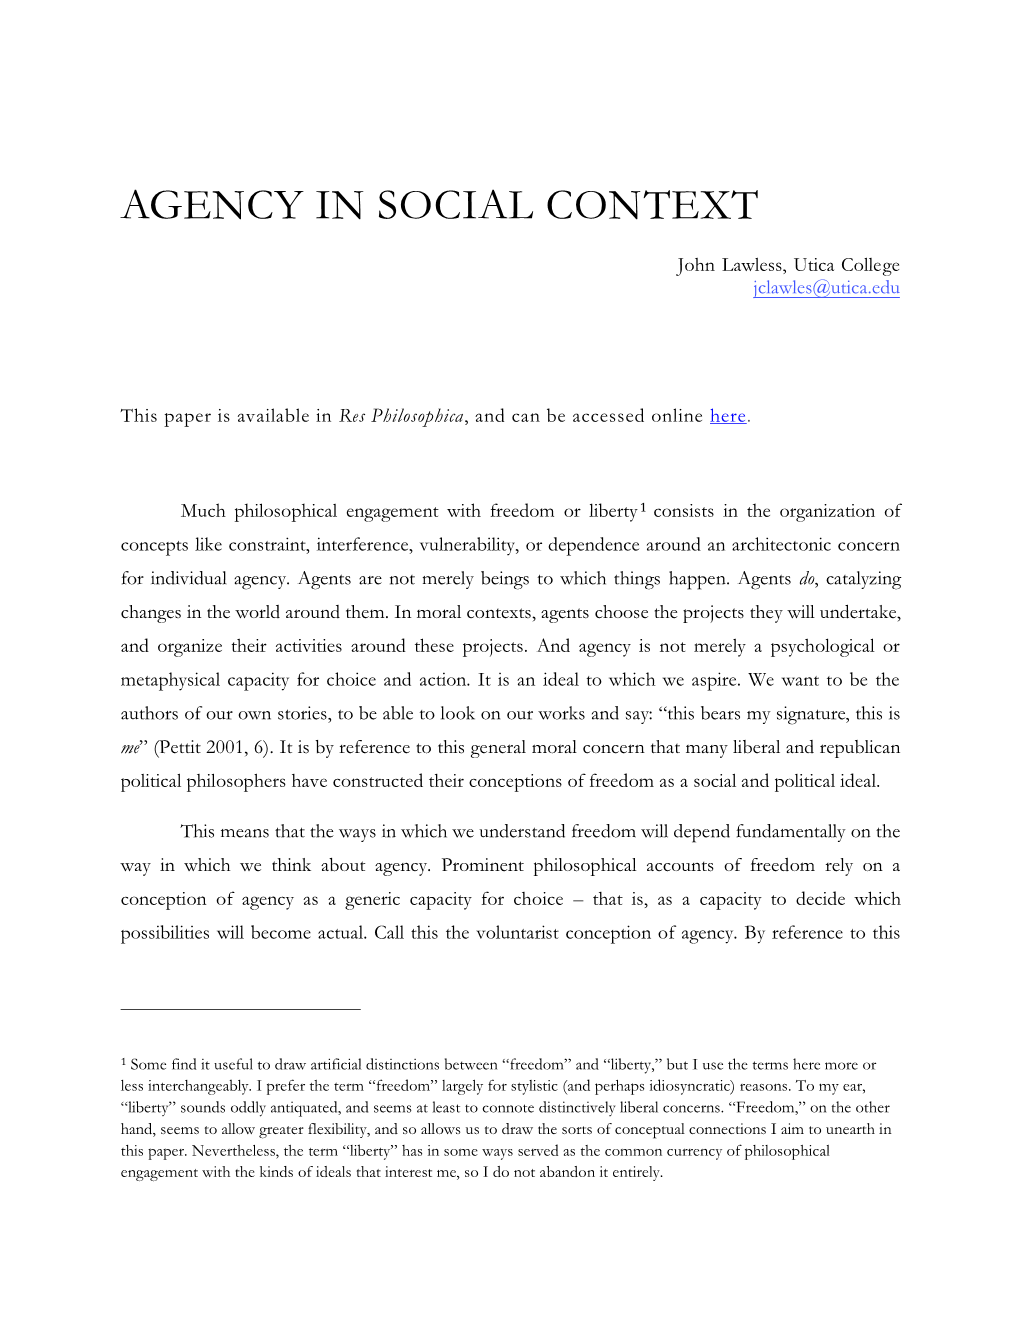 Agency in Social Context